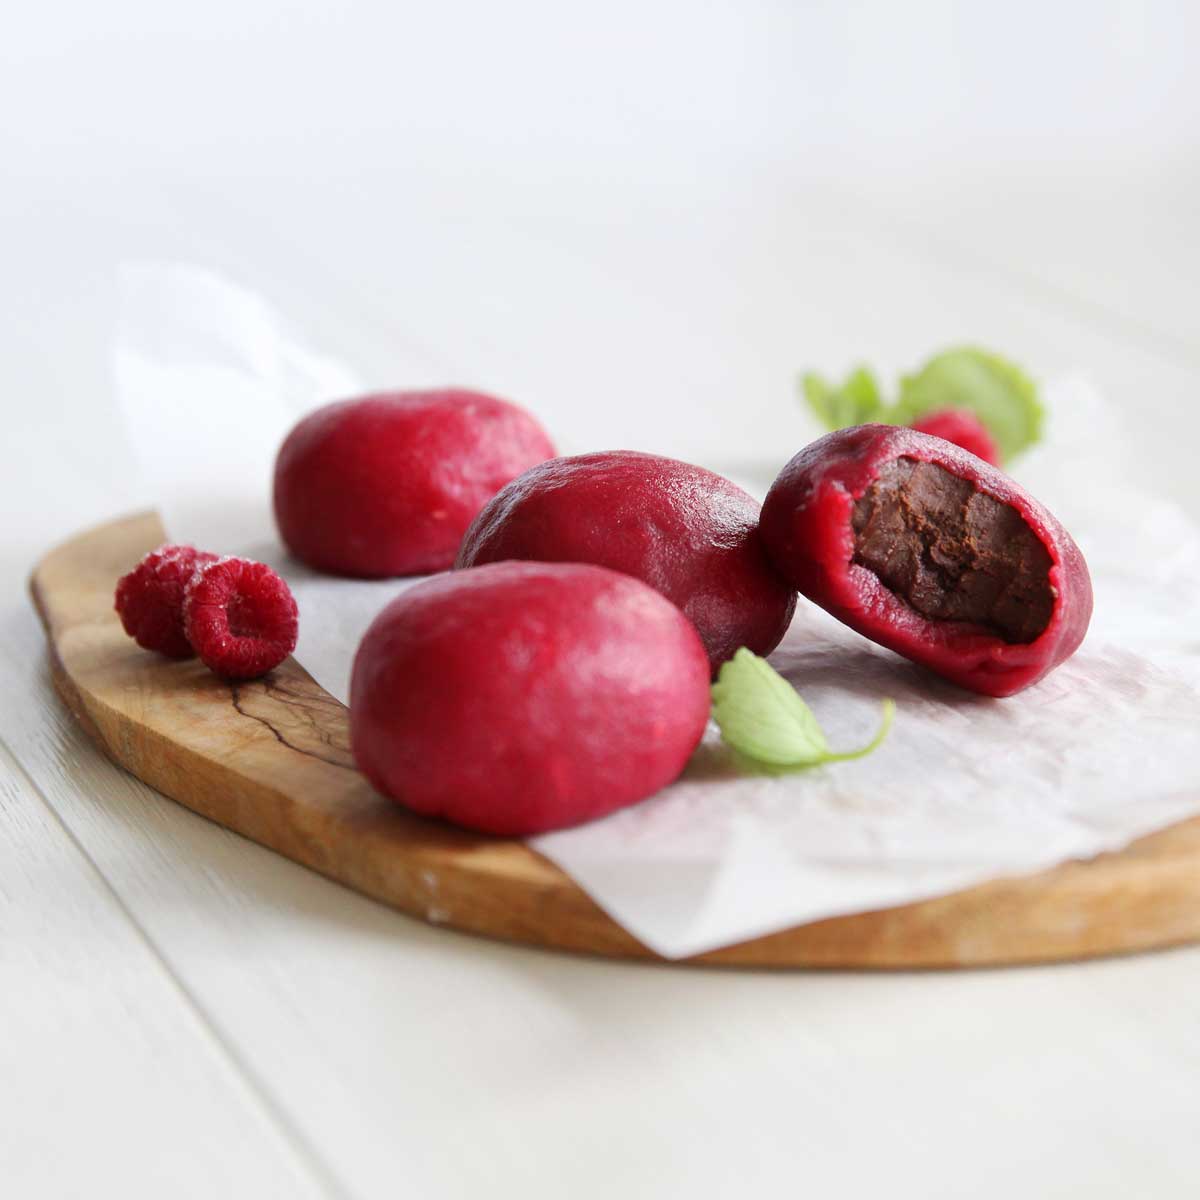 Vegan Raspberry Chocolate Mochi with Chocolate Hazelnut Filling - Roasted Corn Naan